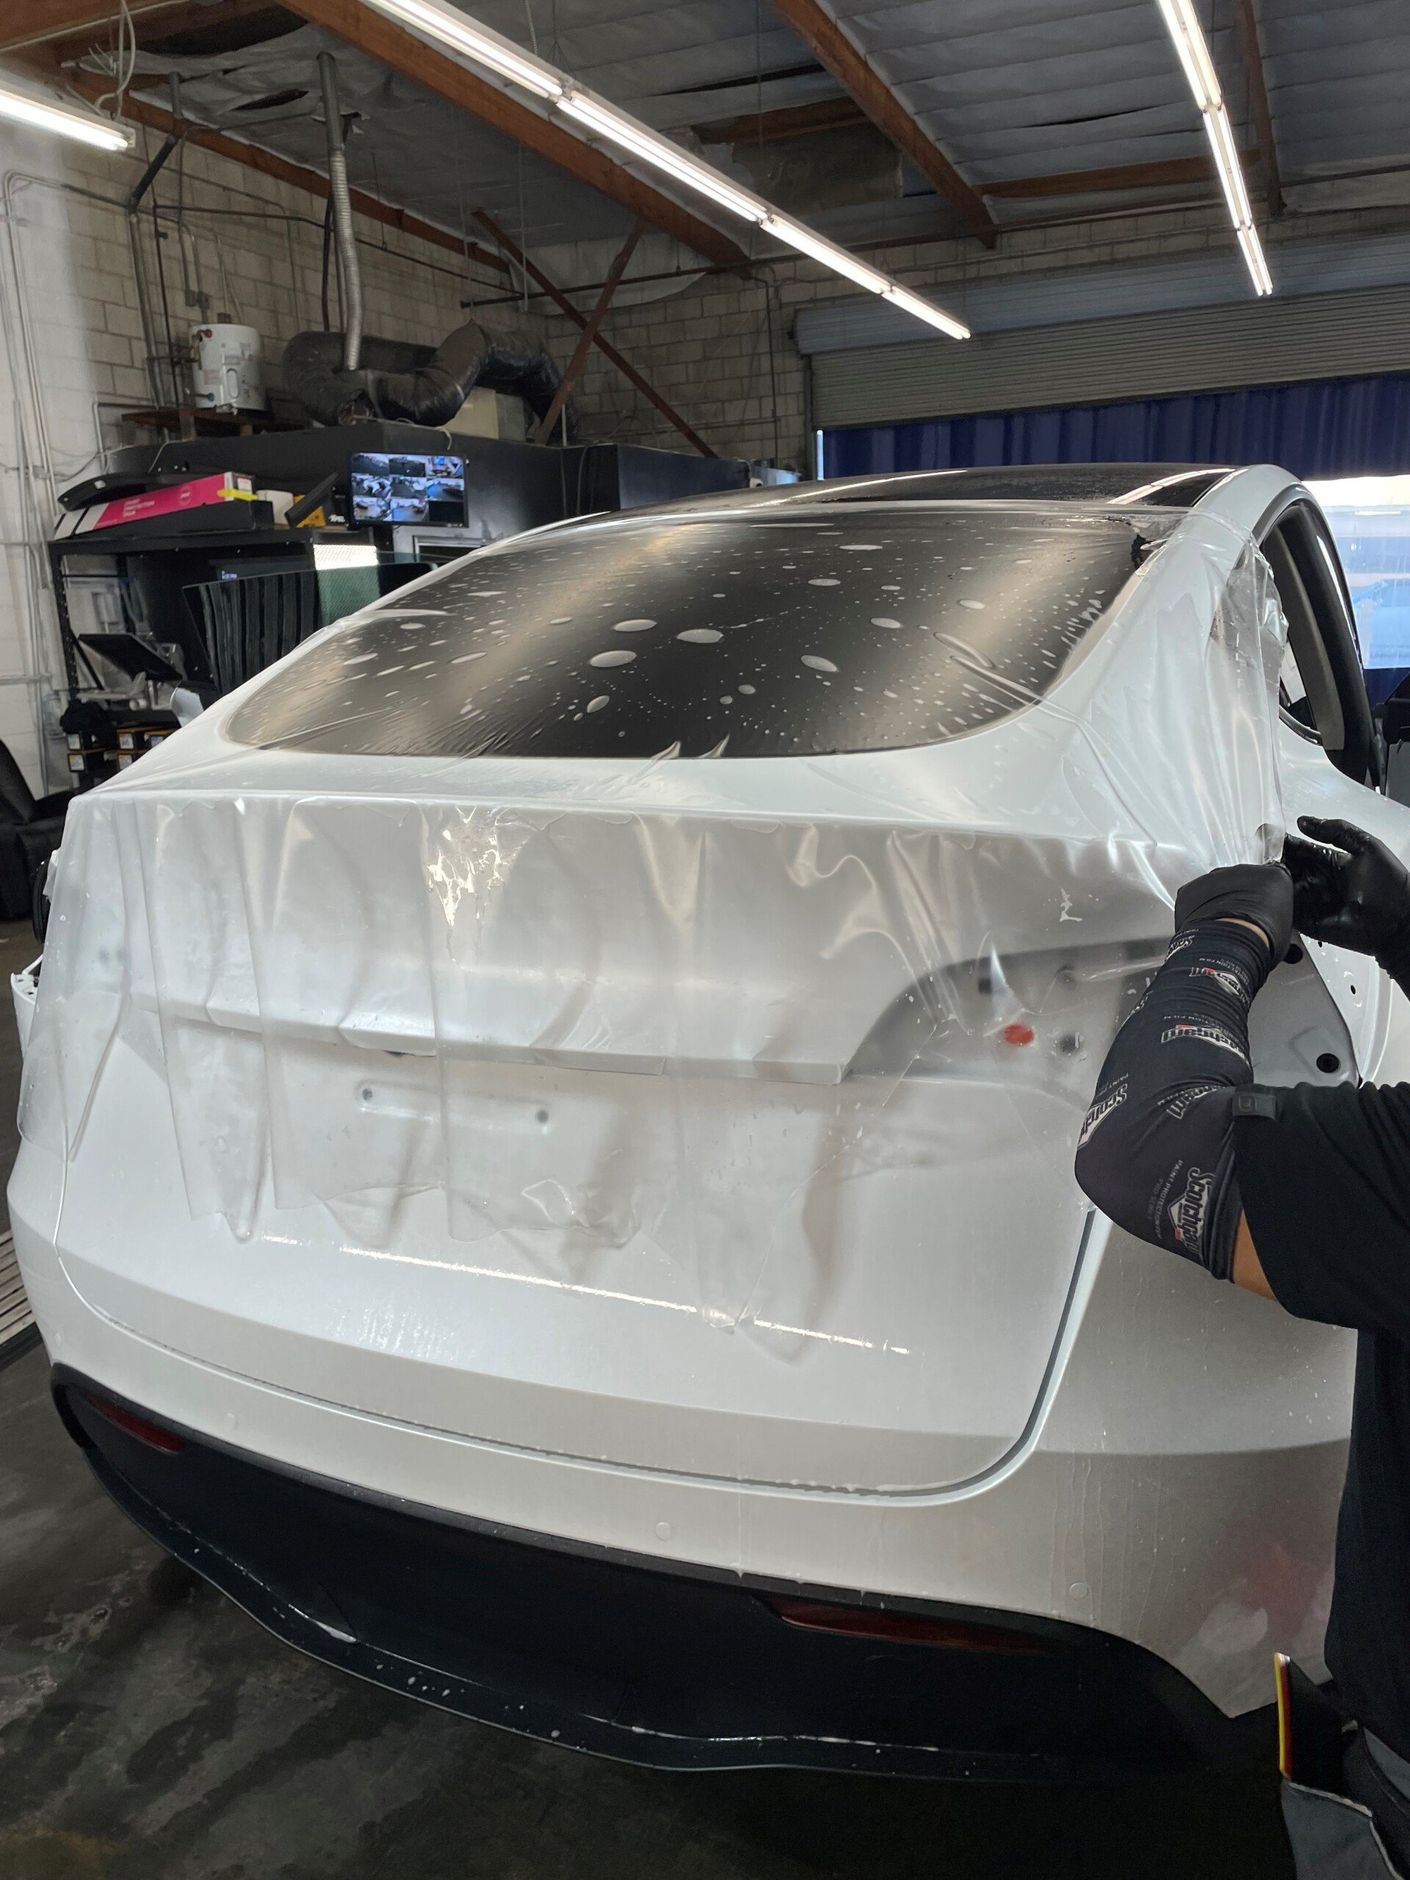 Porsche Paint Protection Film Application in Progress | Upland, CA | The SoCal Auto Salon